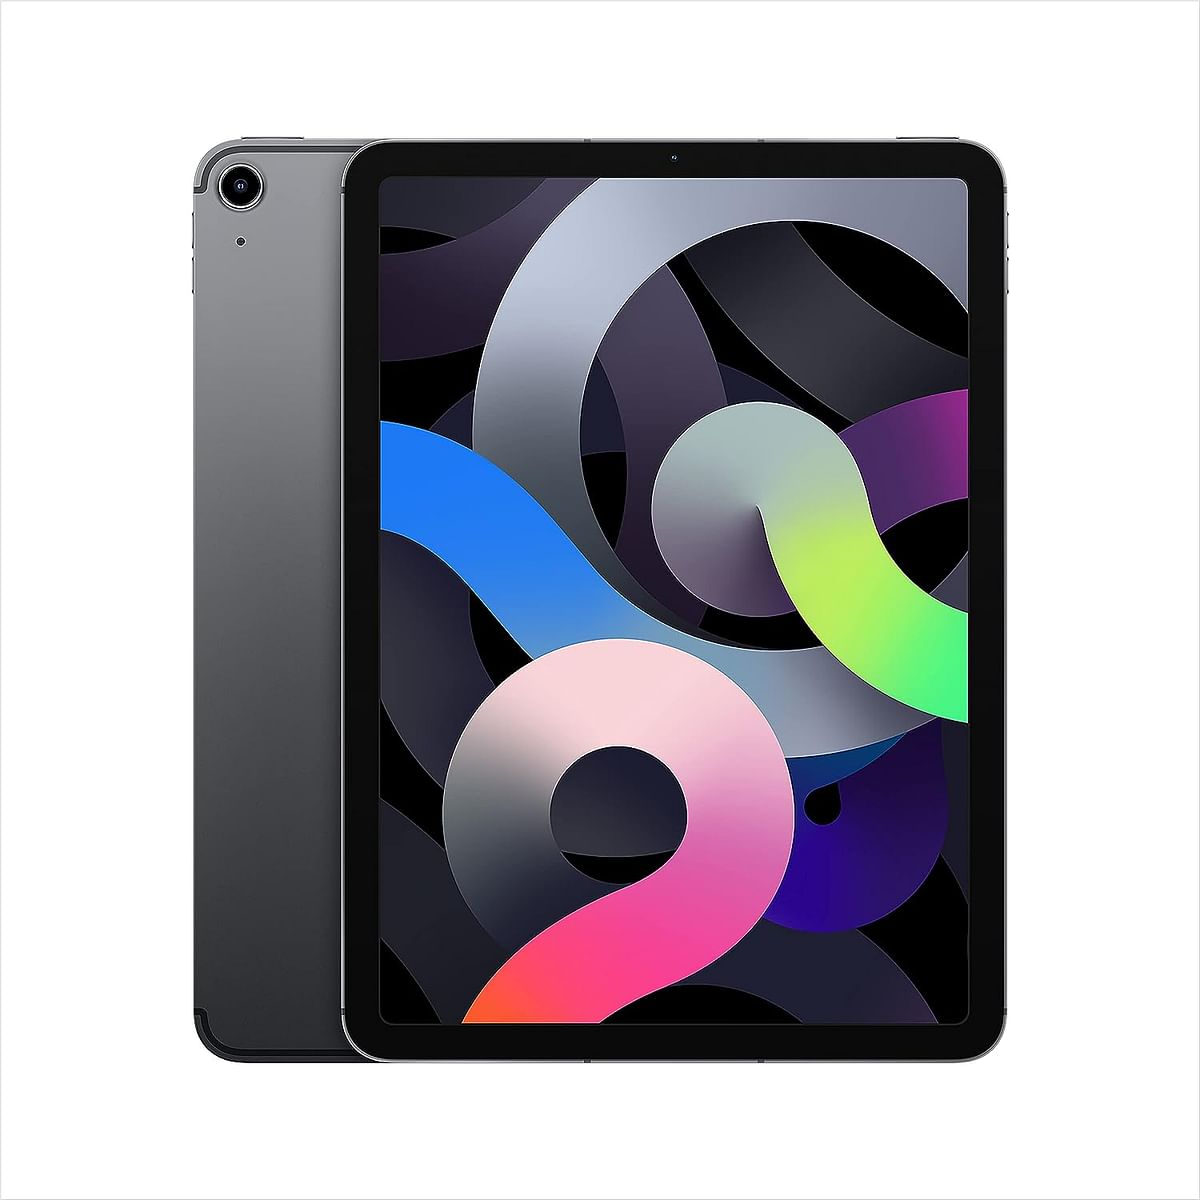 Apple iPad Air 2020 - 4th Gen 10.9-inch 64GB Wi-Fi Space Gray